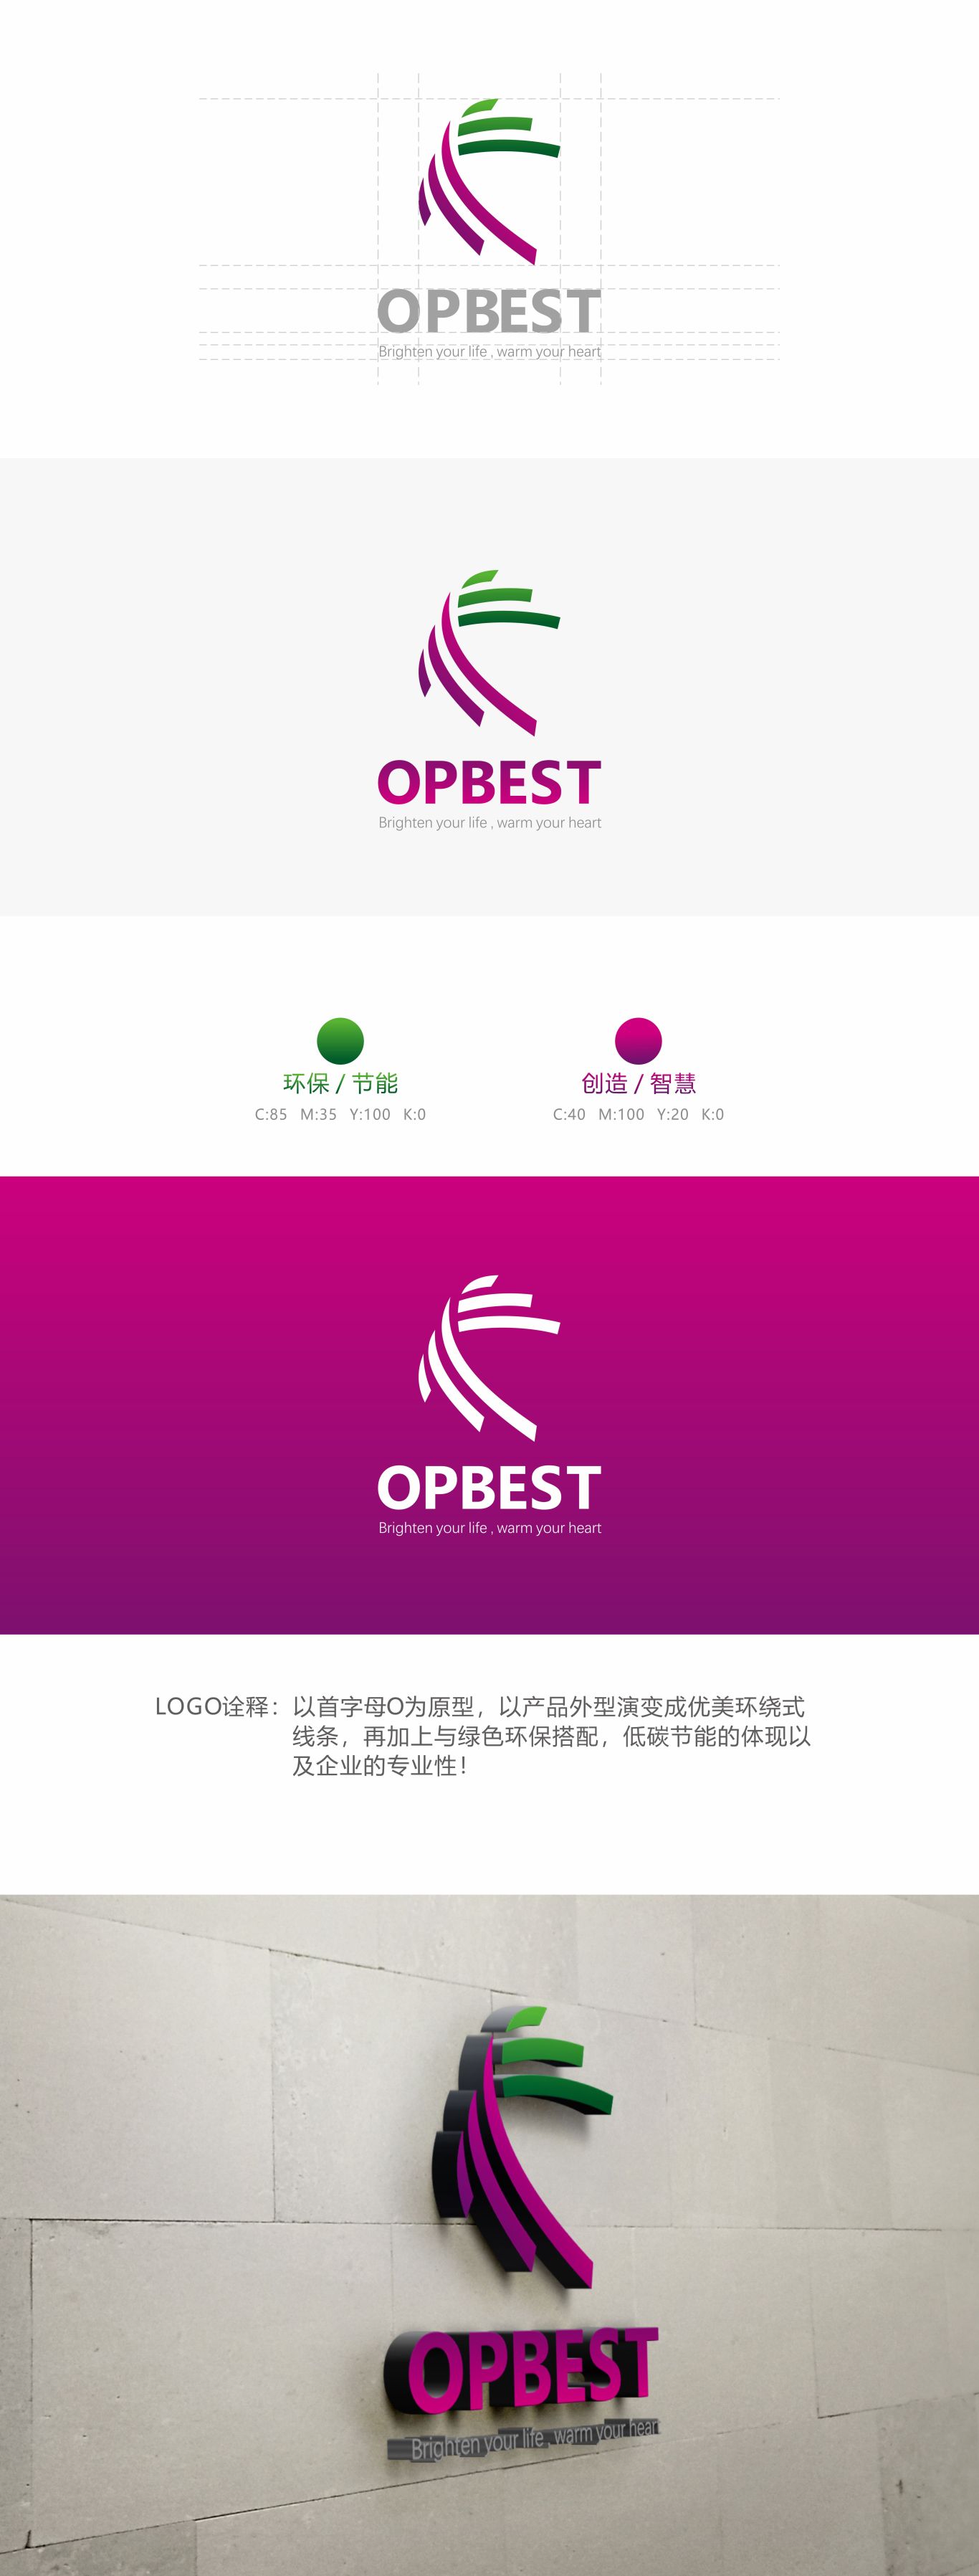 OPBEST公司logo设计图0